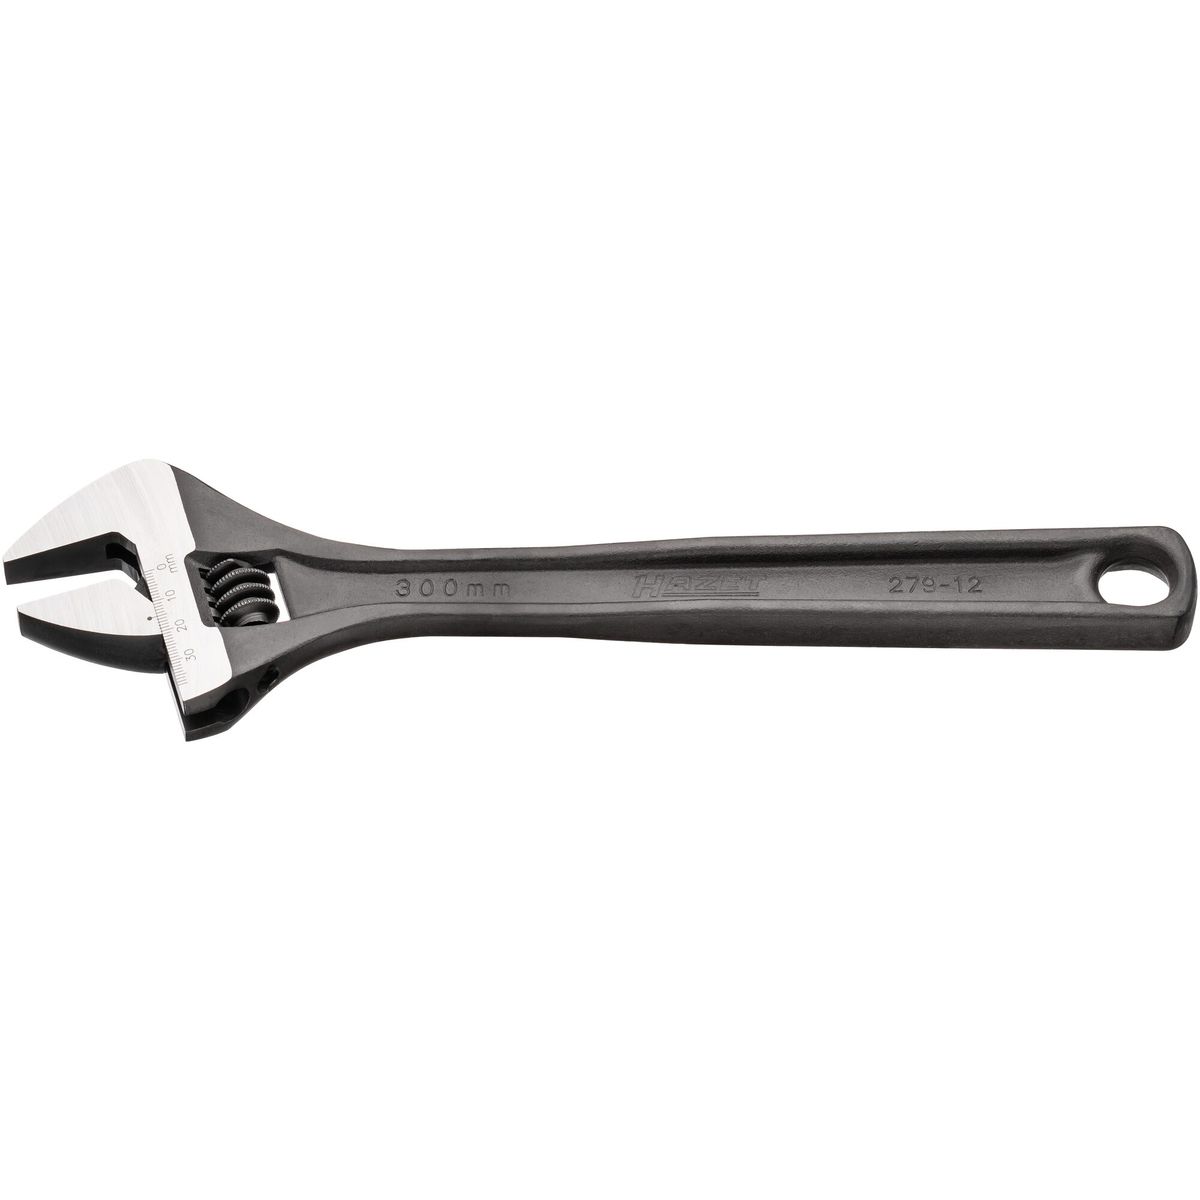 Adjustable Wrench No.279-12 Hazet®